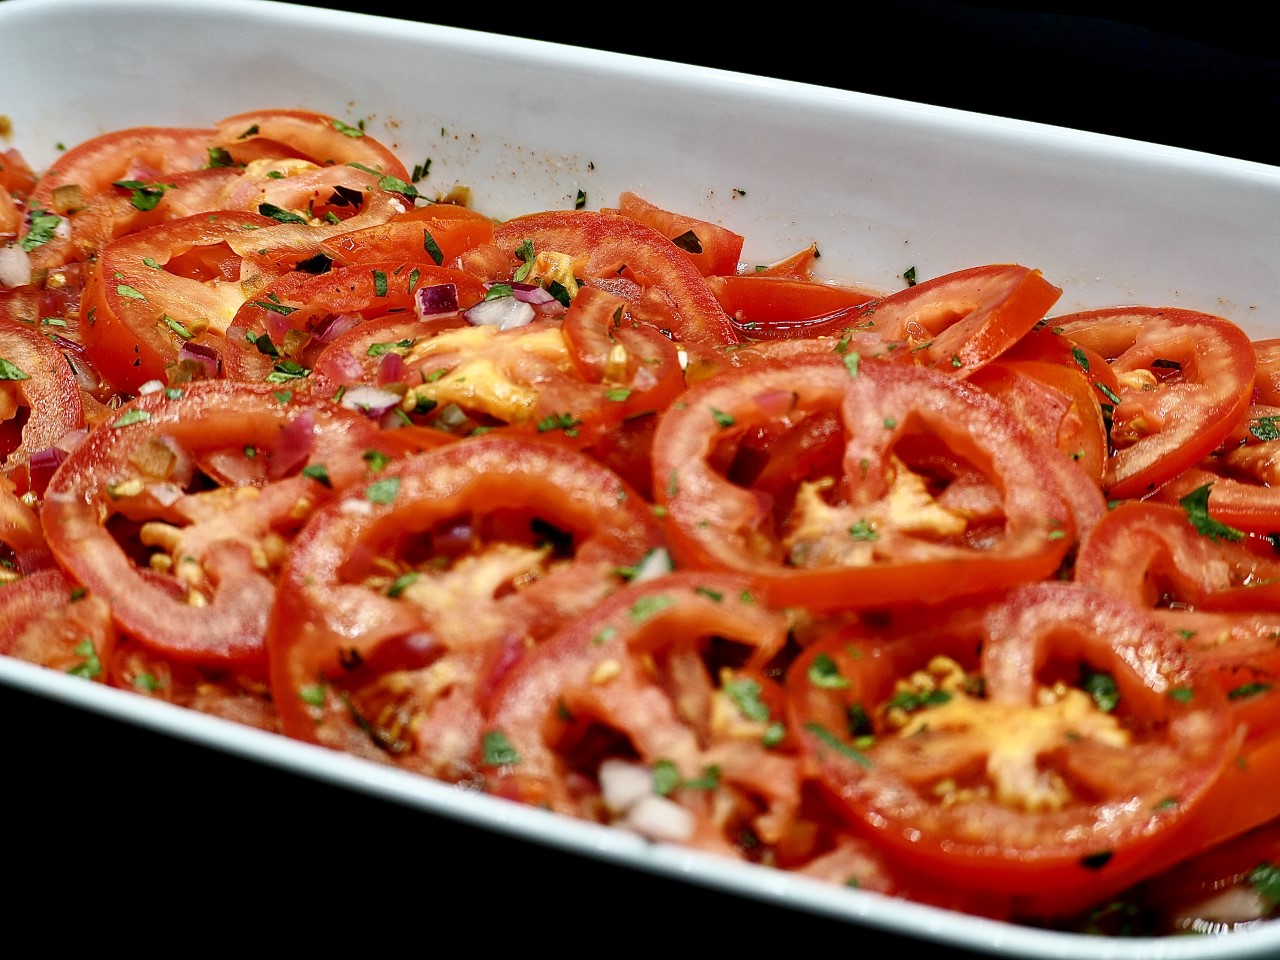 Tomato Salad with Cilantro Vinaigrette